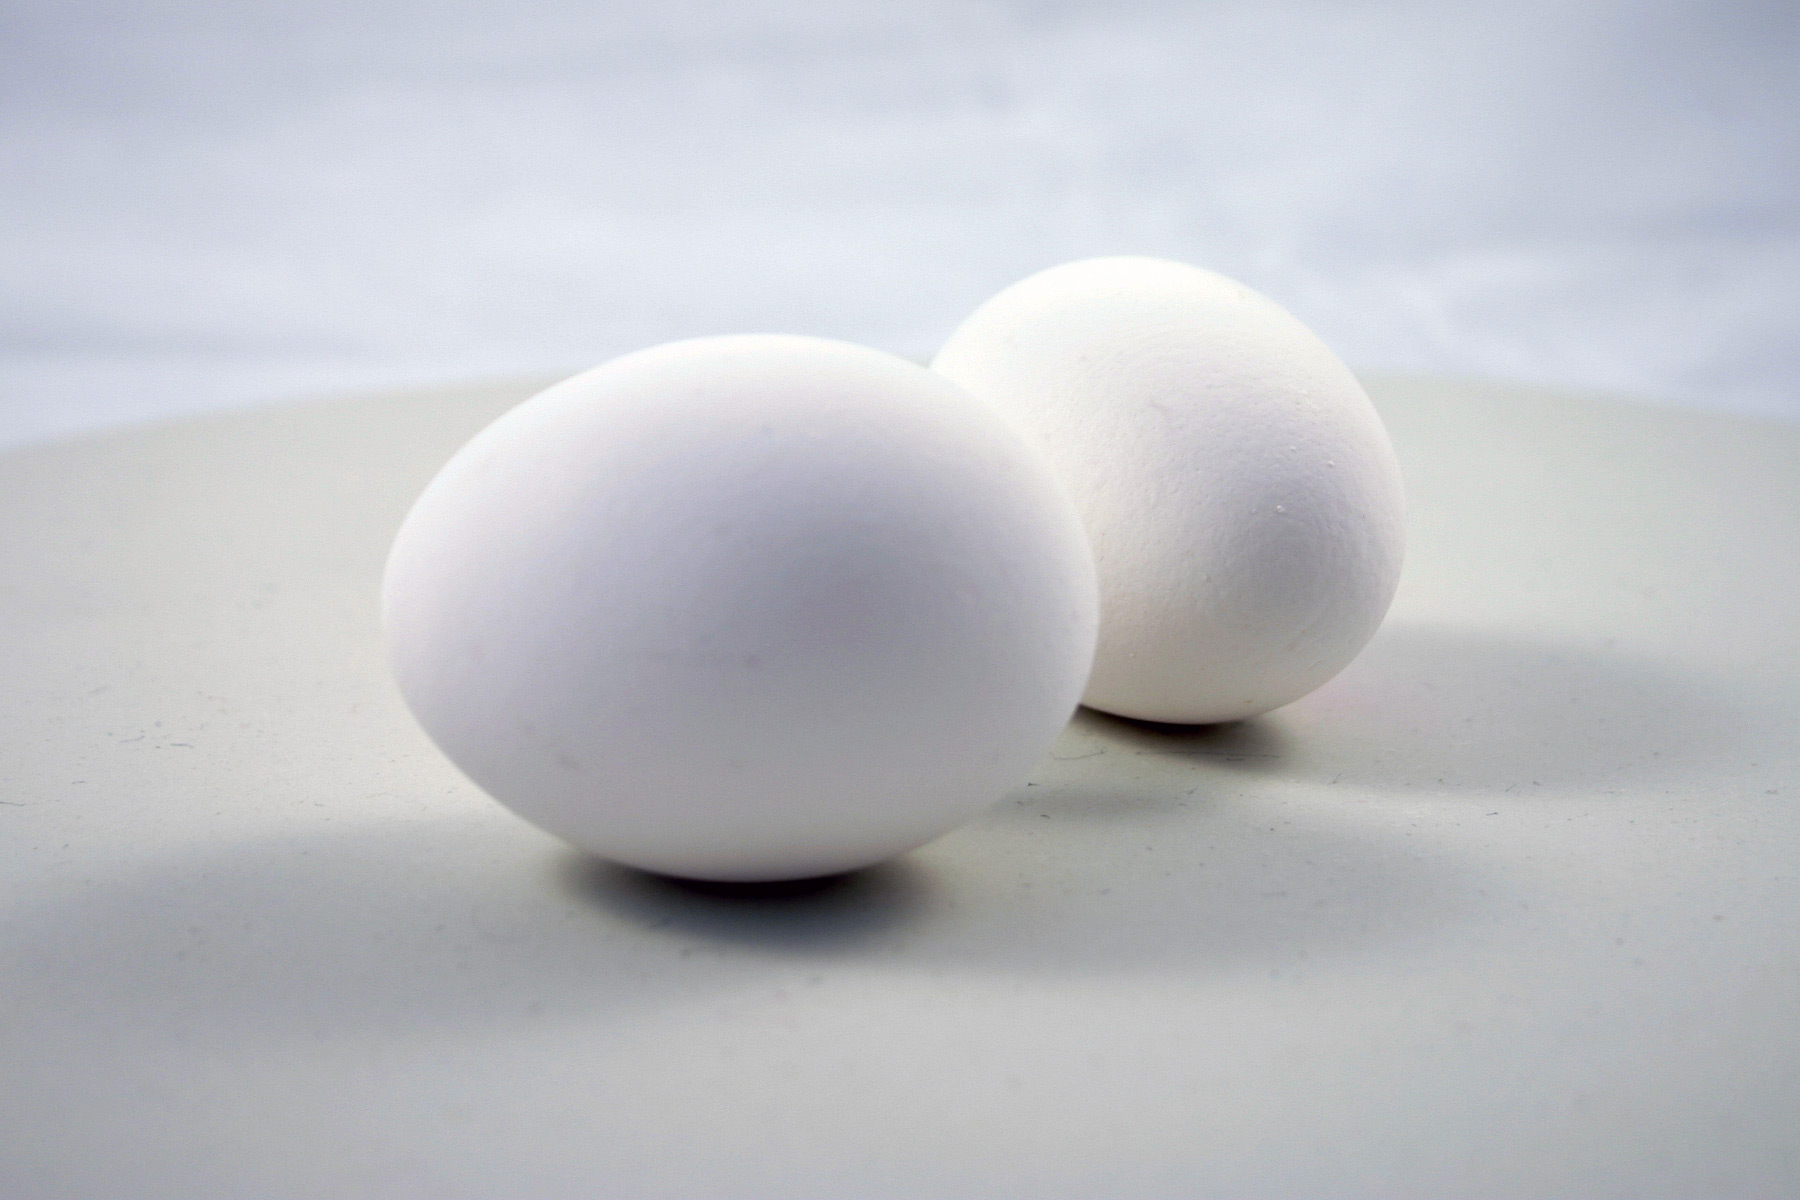 Two eggs photo